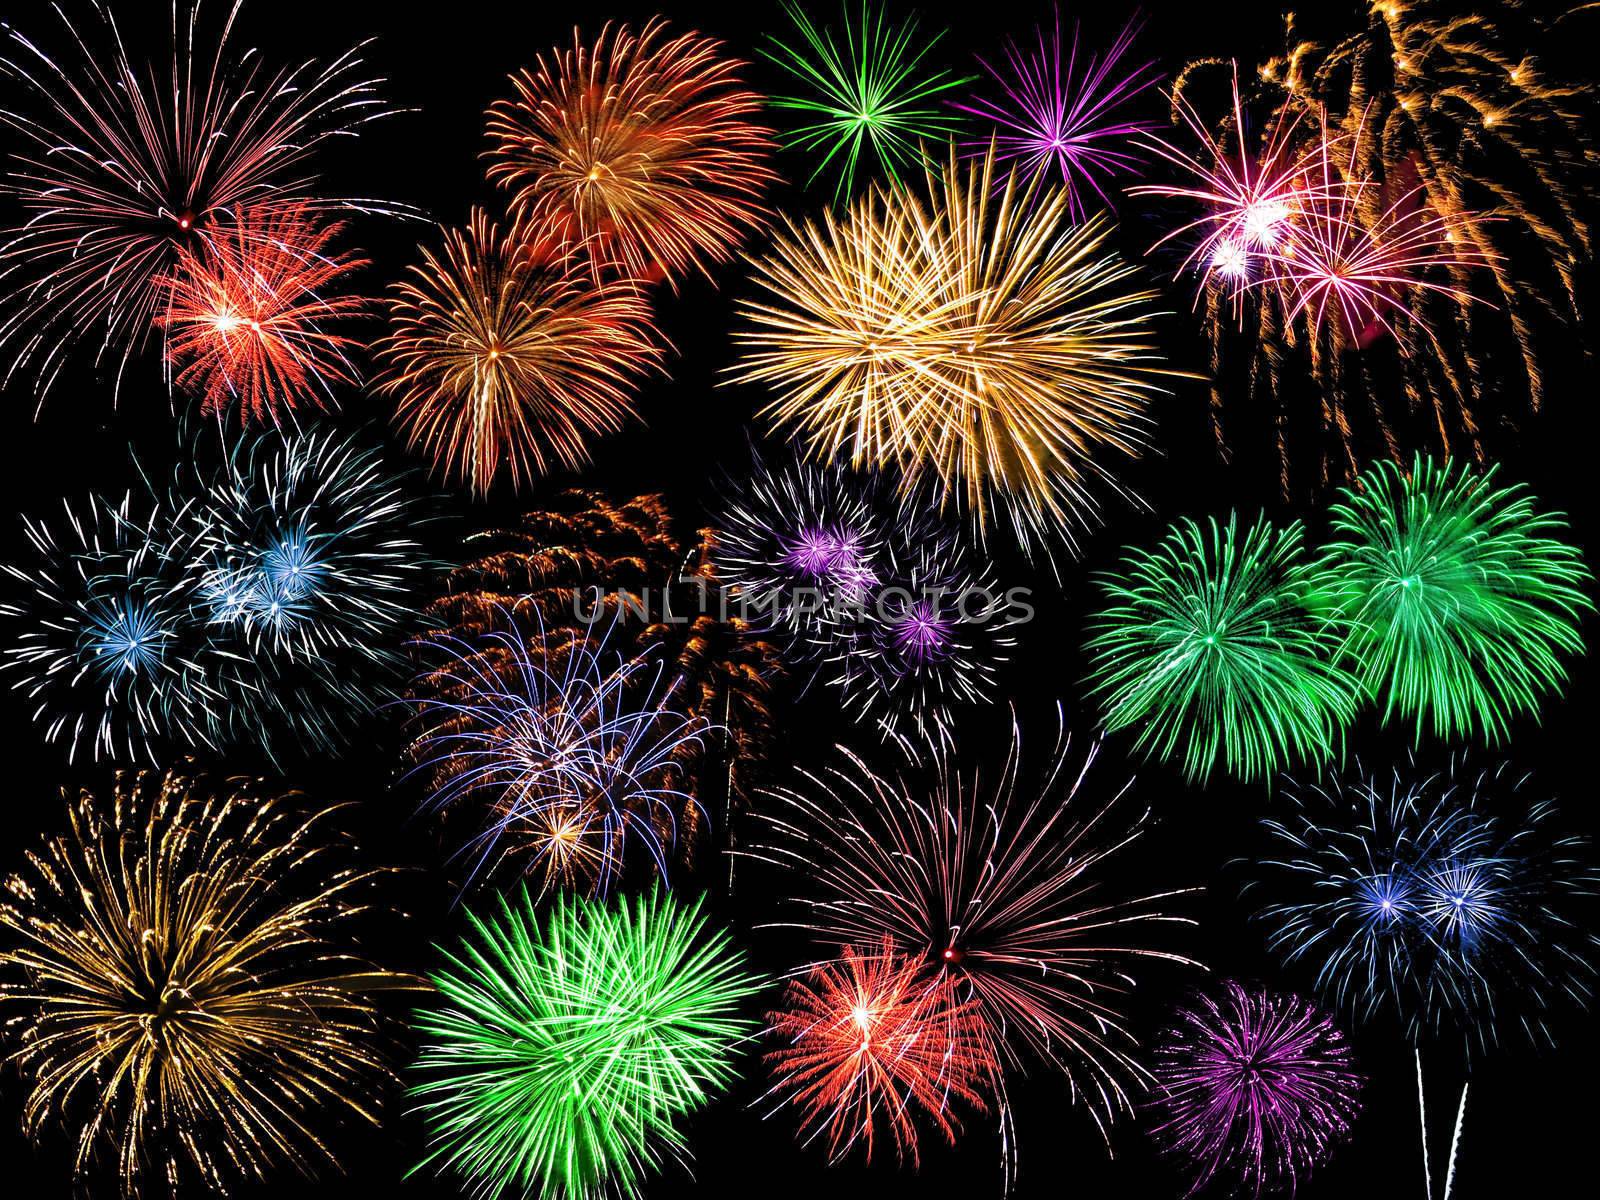 Collage of Multicolored Fireworks Against a Black Sky by Frankljunior